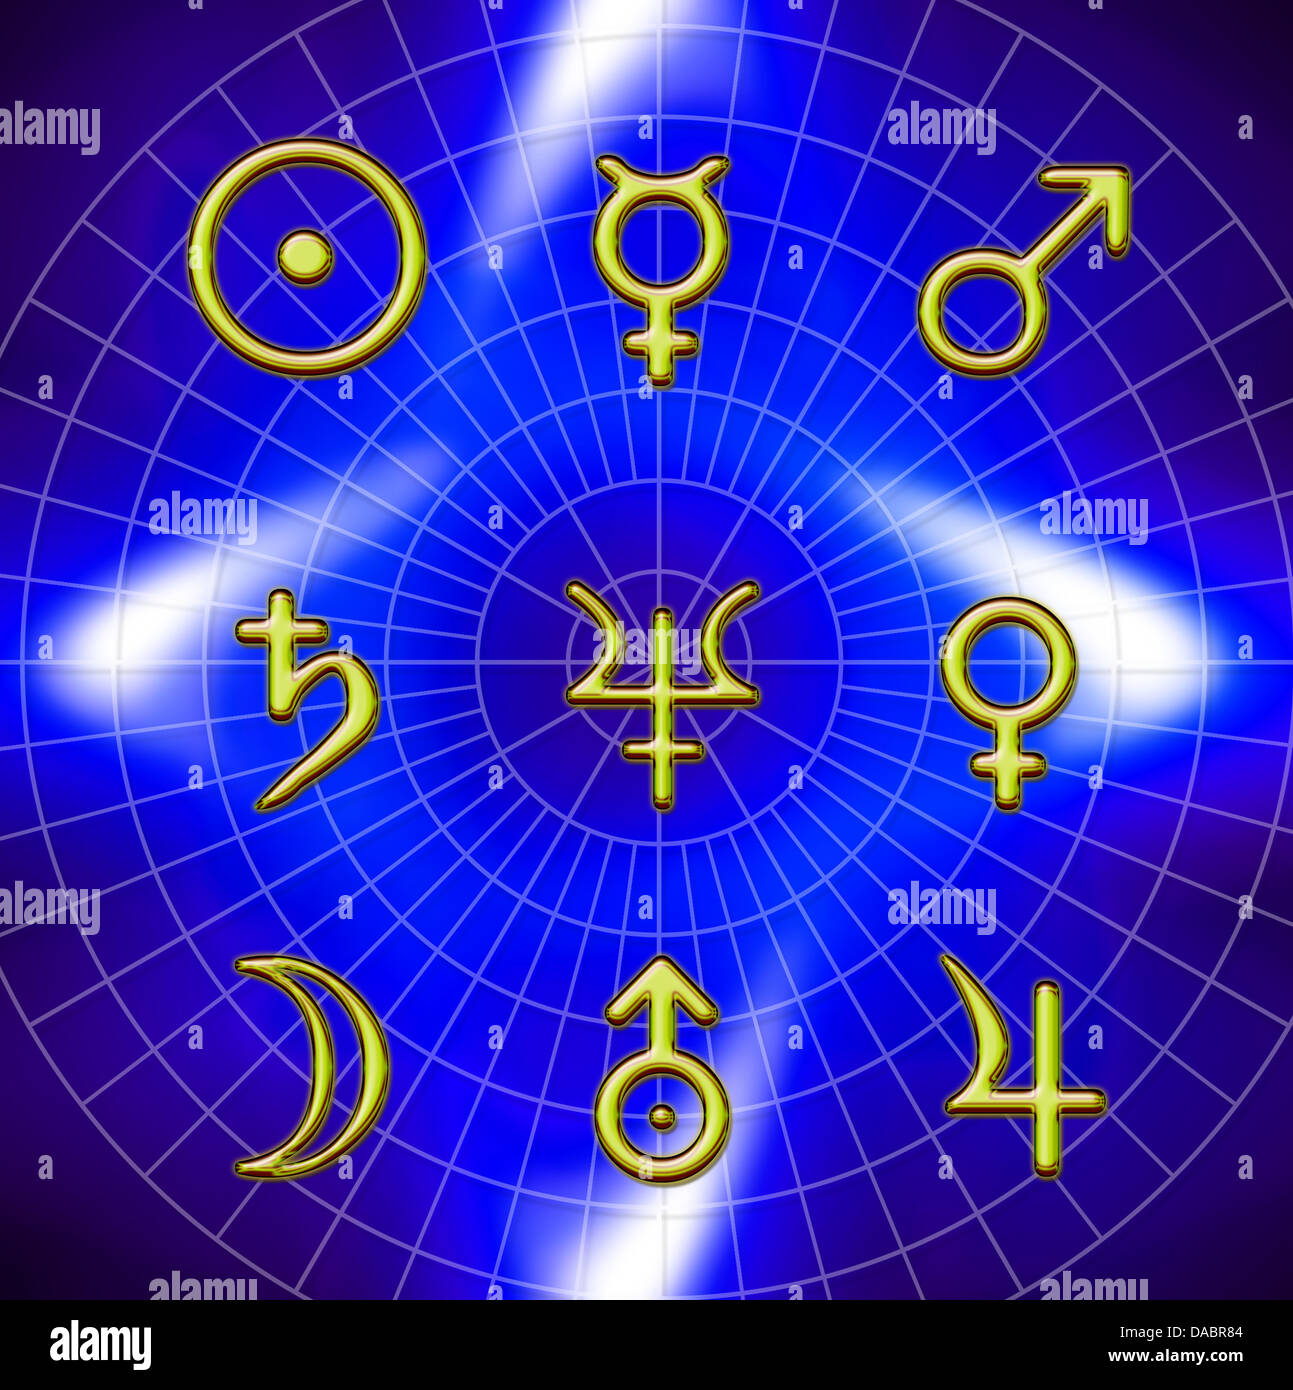 planet symbols vedic astrology